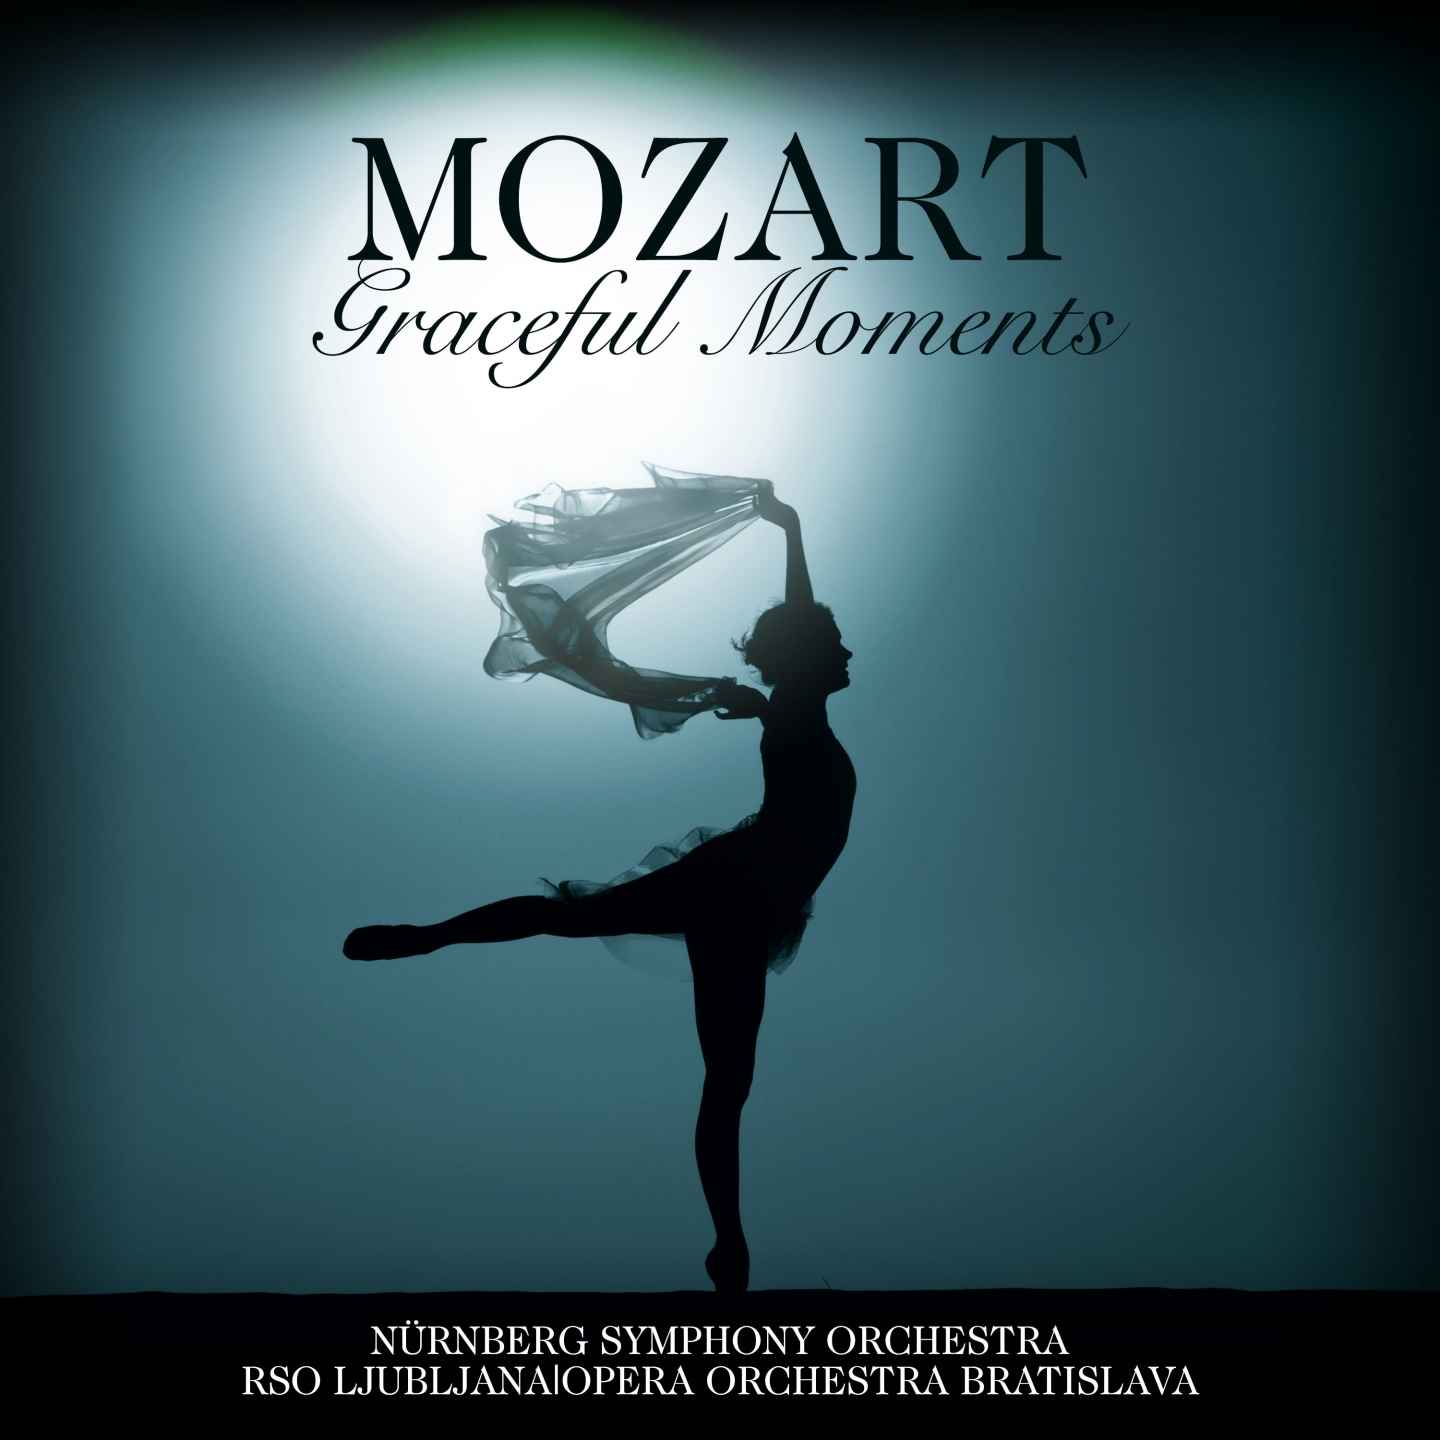 Mozart: Graceful Moments